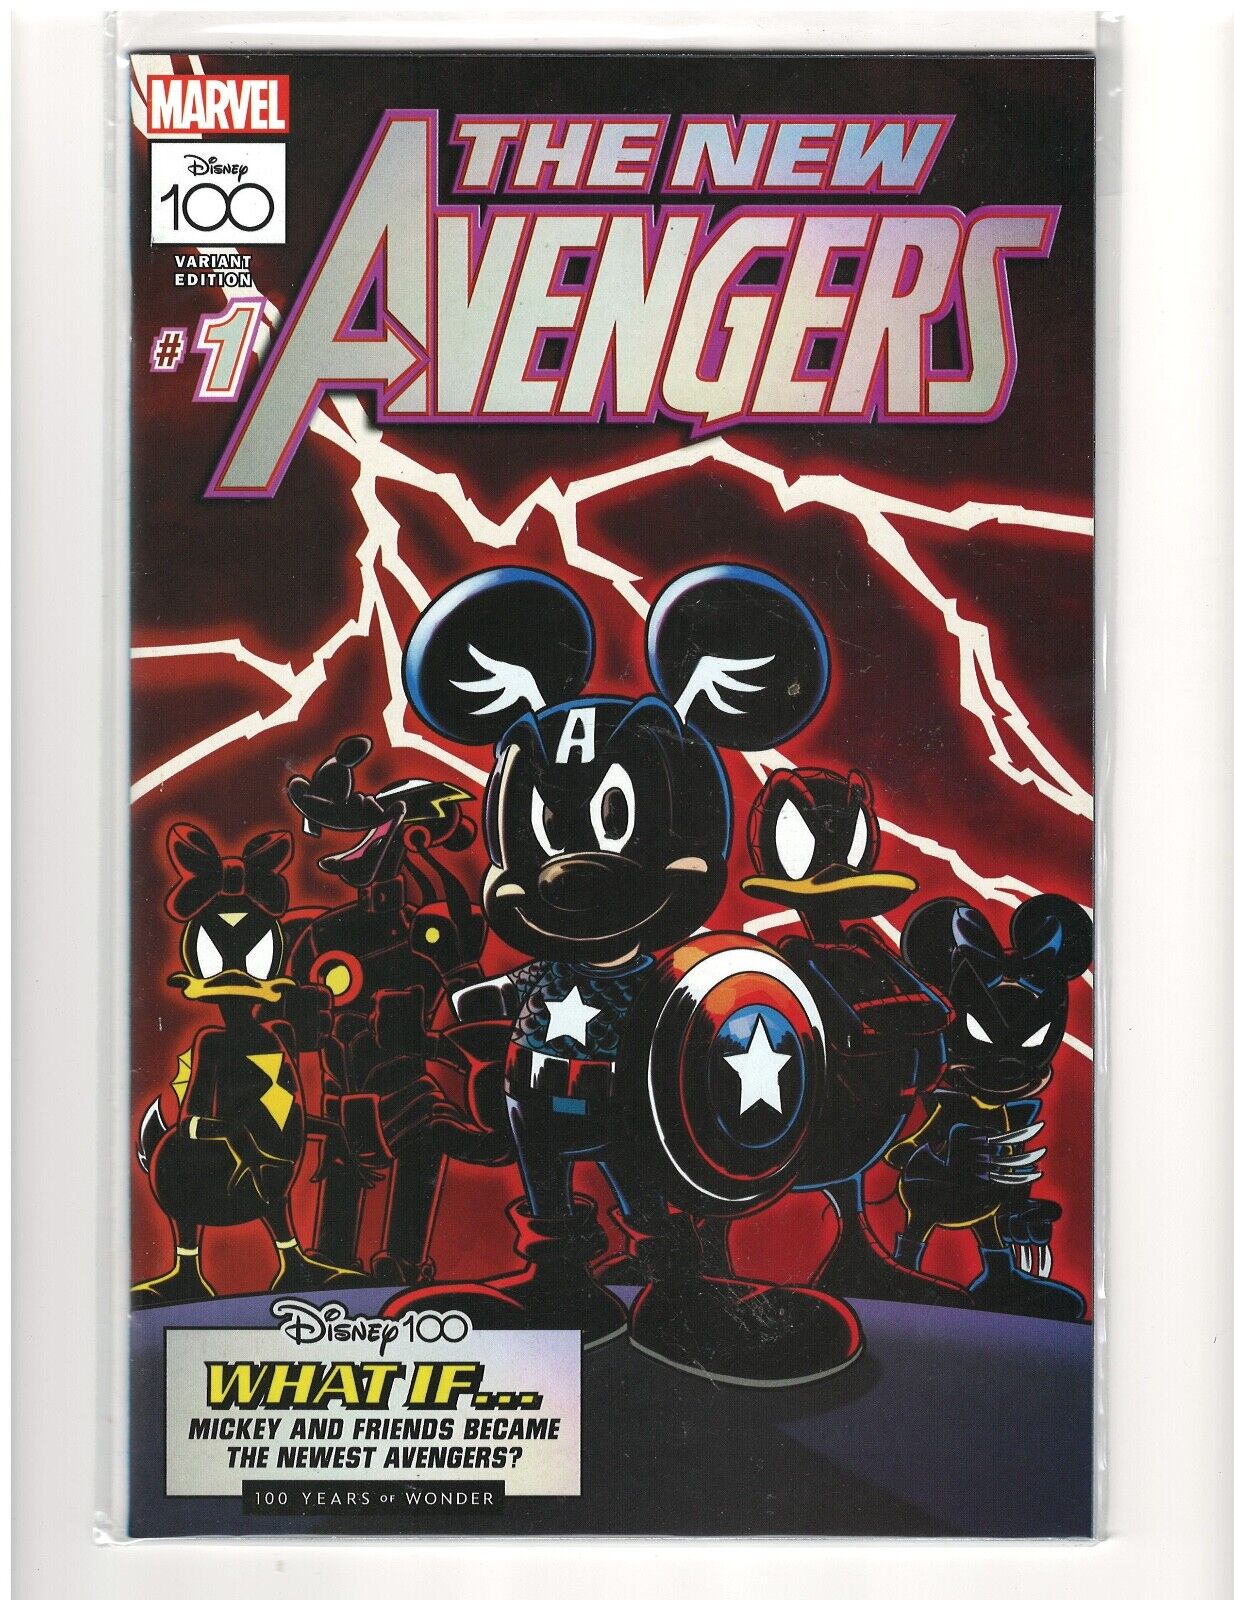 Amazing Spiderman Volume 6 #25 giant size issue Disney 100 Avengers variant 9.6